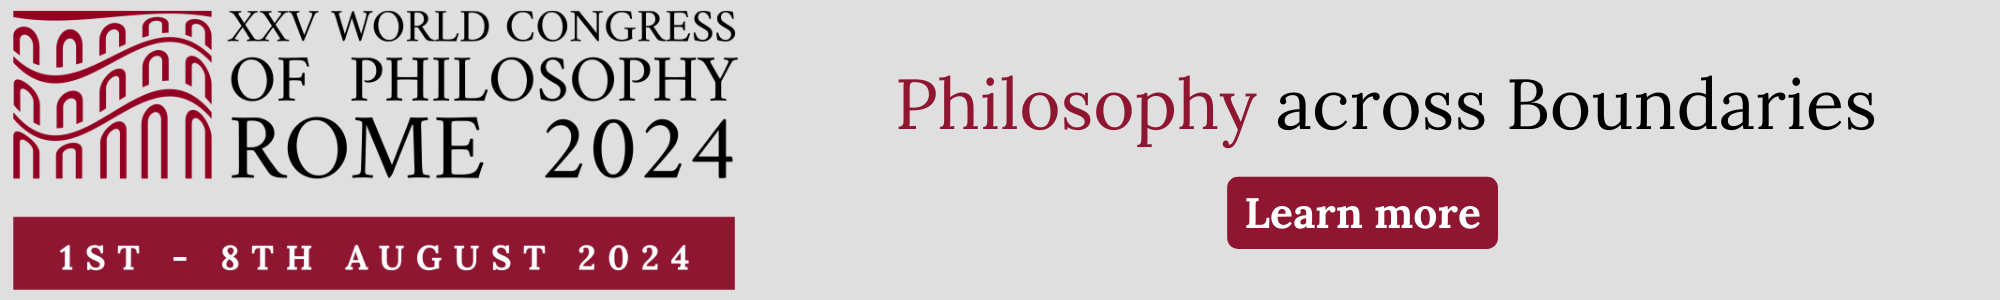 World Congress of Philosophy 2024